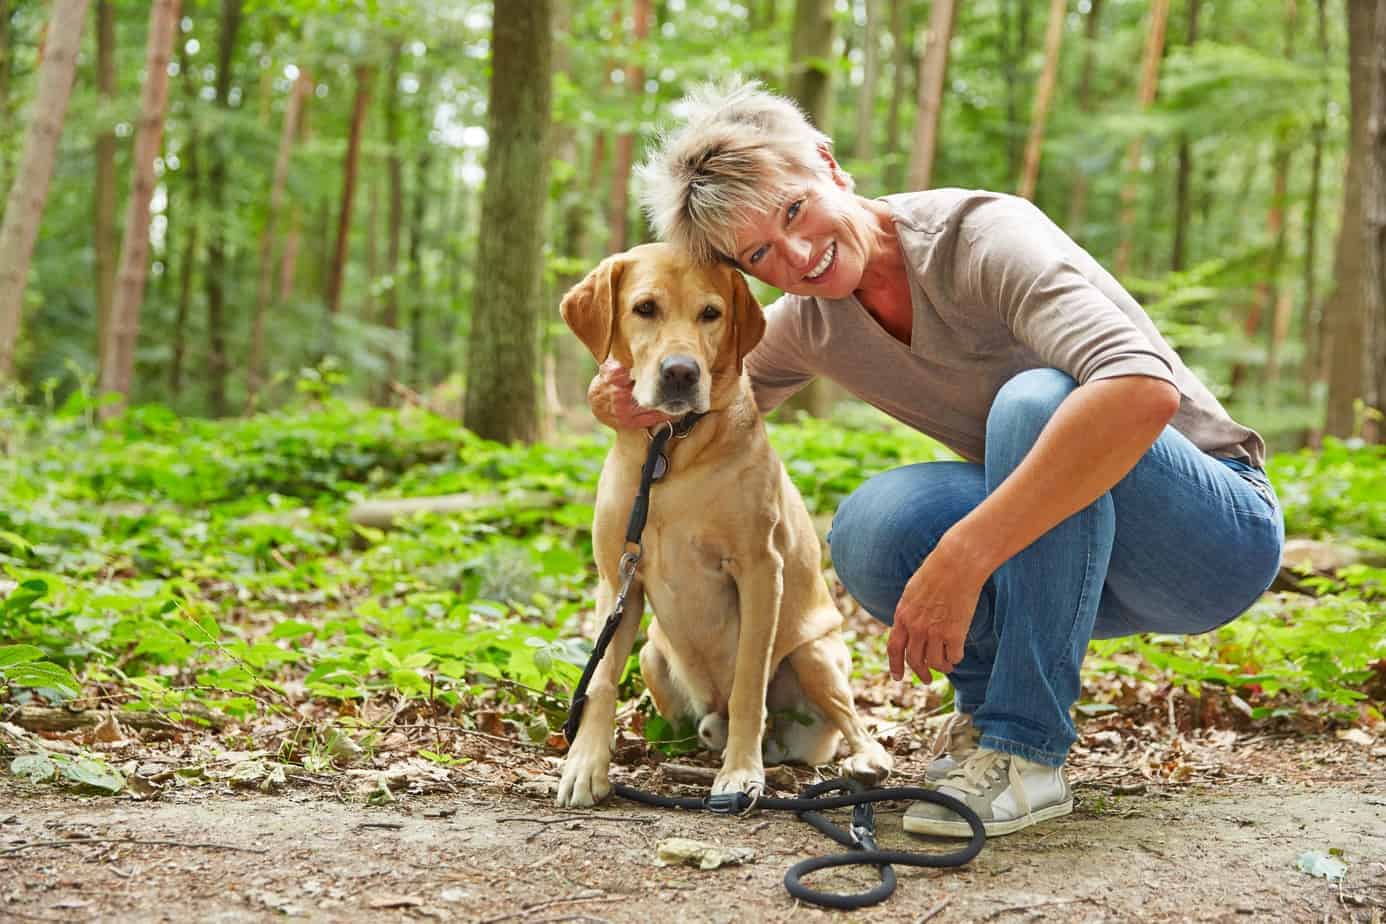 Woman cuddles with golden retriever. Seniors face dangers walking dogs.